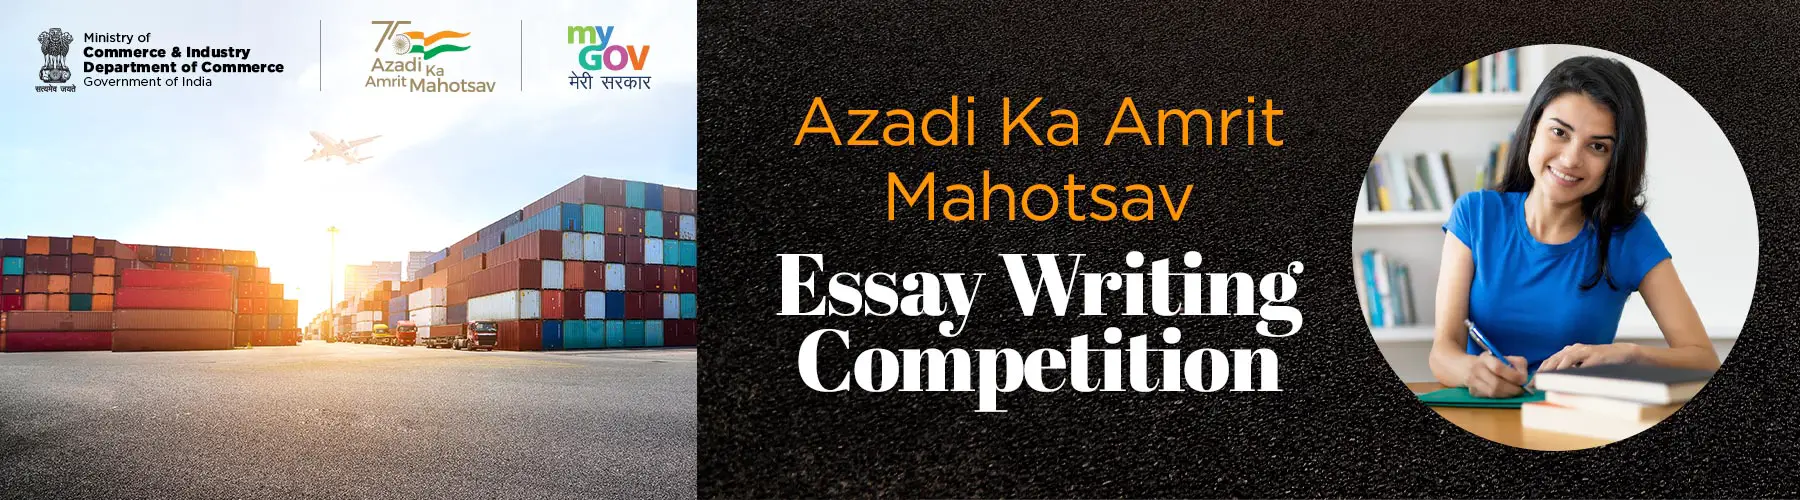  Participate in Azadi ka Amrit Mahotsav Essay Writing Competition